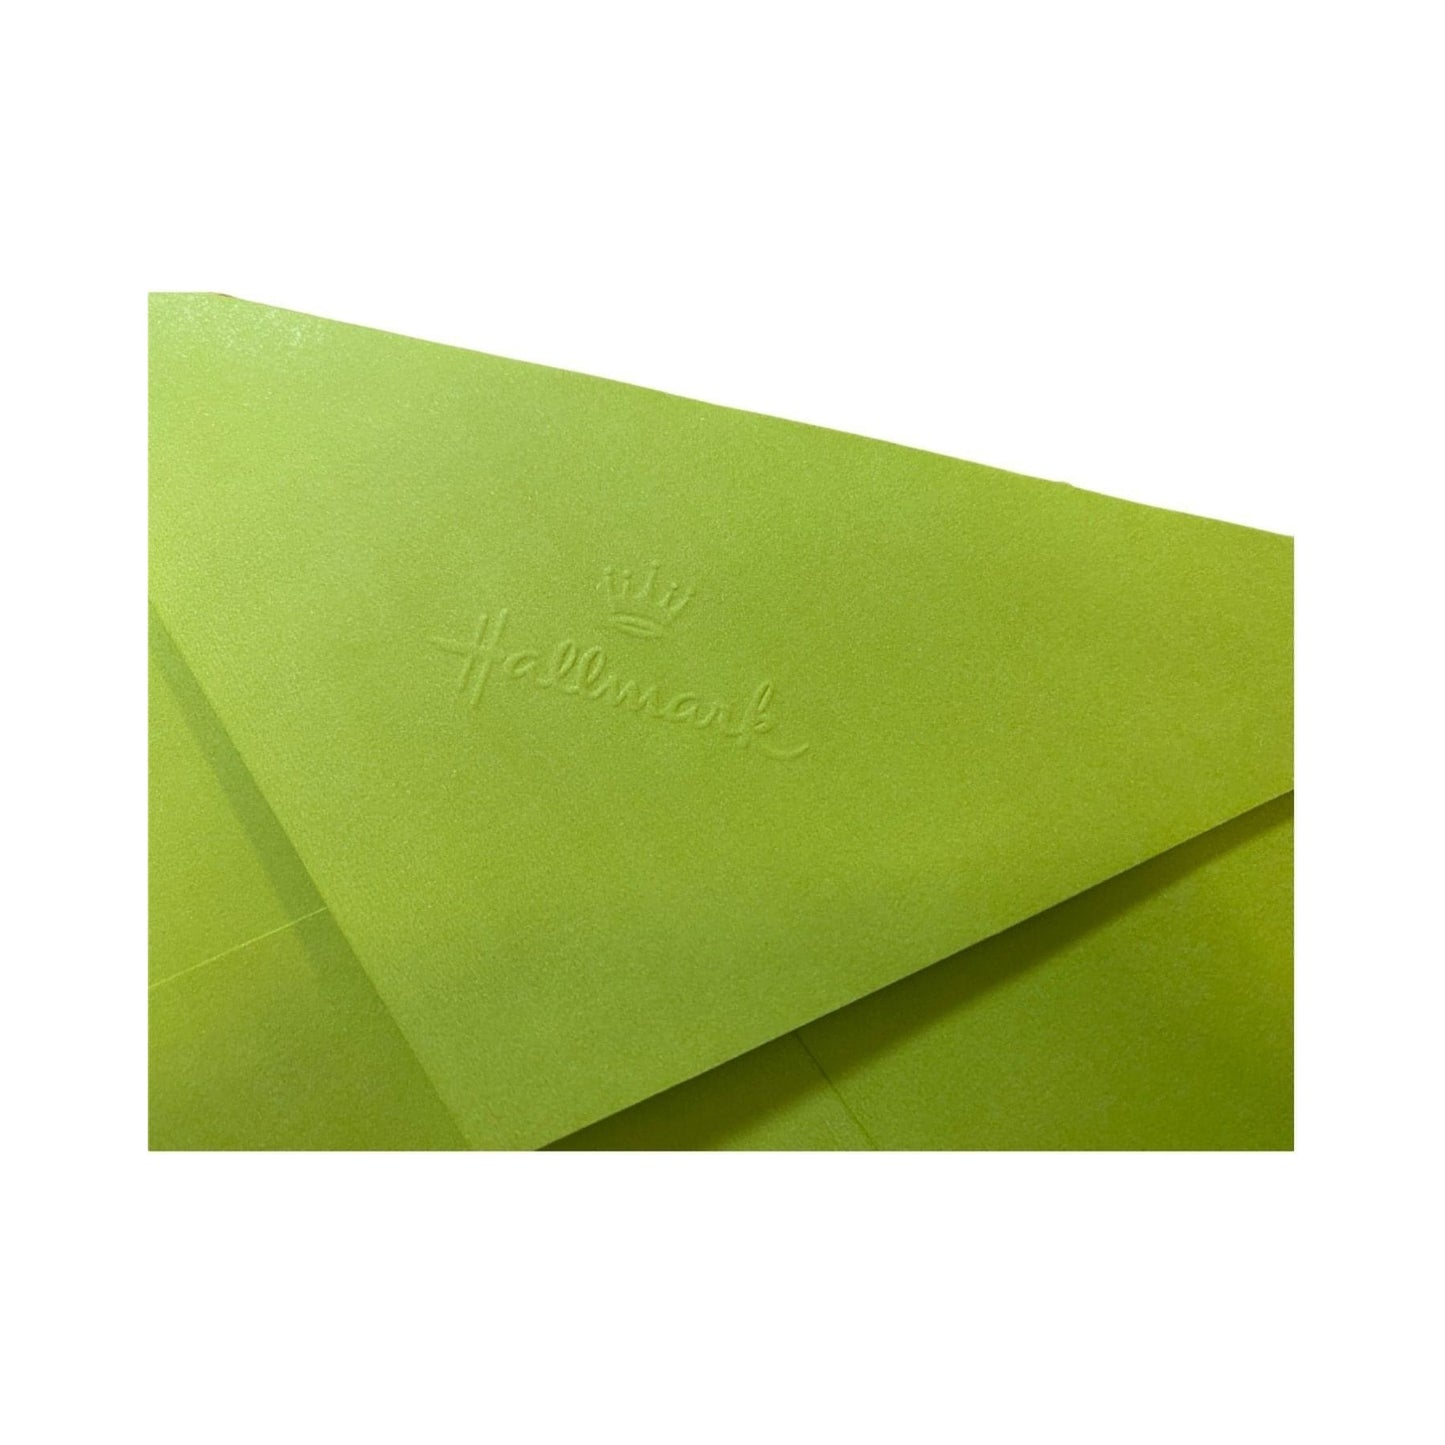 Hallmar-Birthday Card with Envelope - Heartline by Hallmark - "I AM LOVED!" - Brandat Outlet